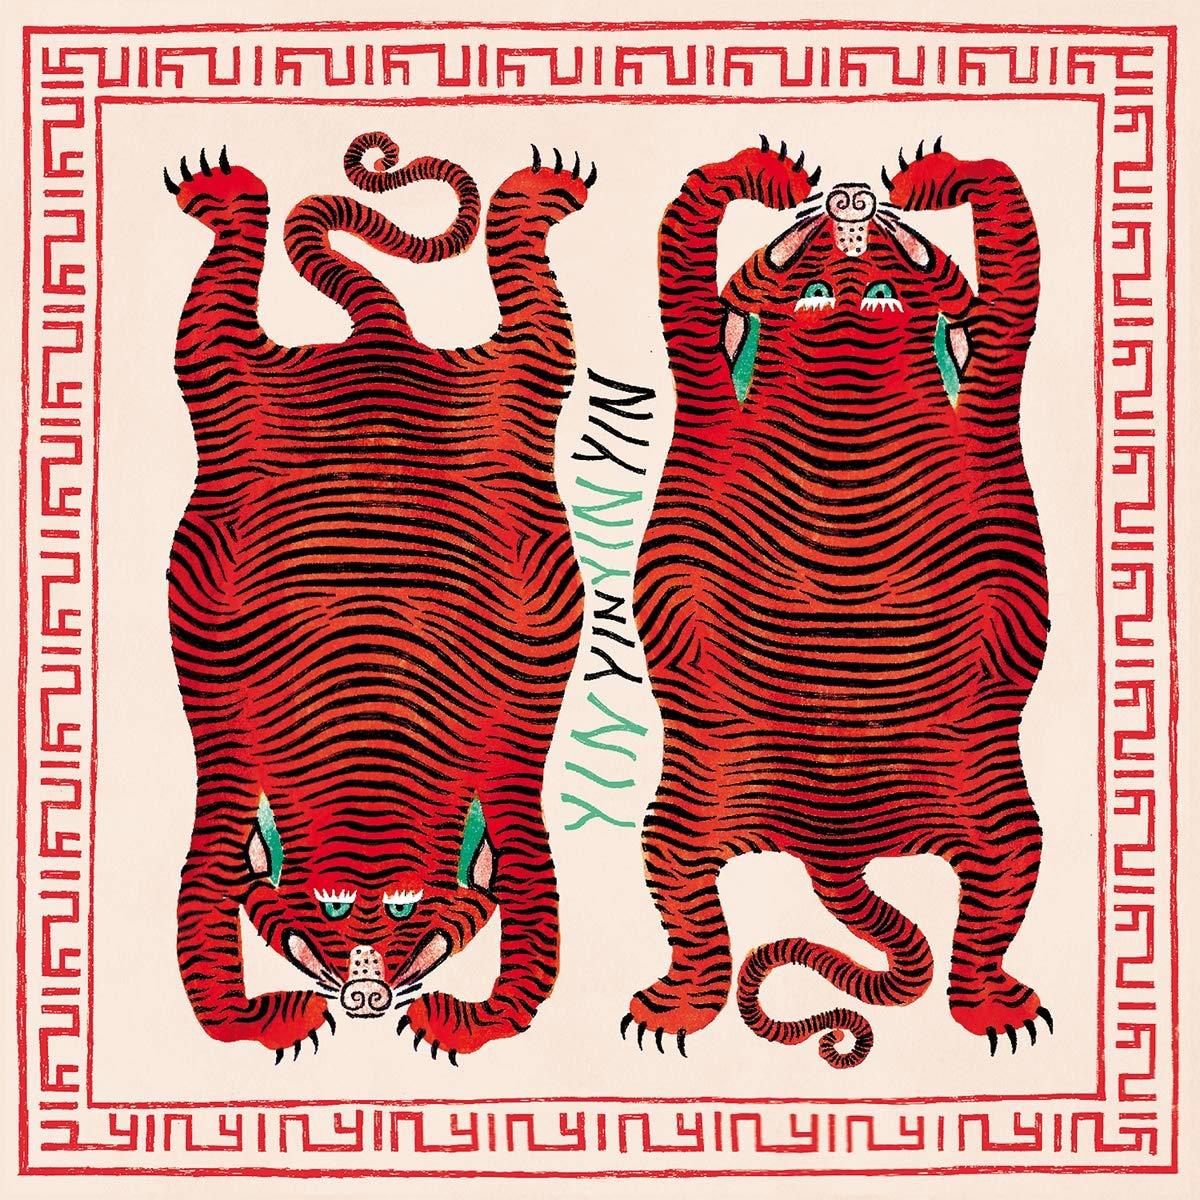 Yin Yin - The That Hunts Tigers (CD) - Rabbit